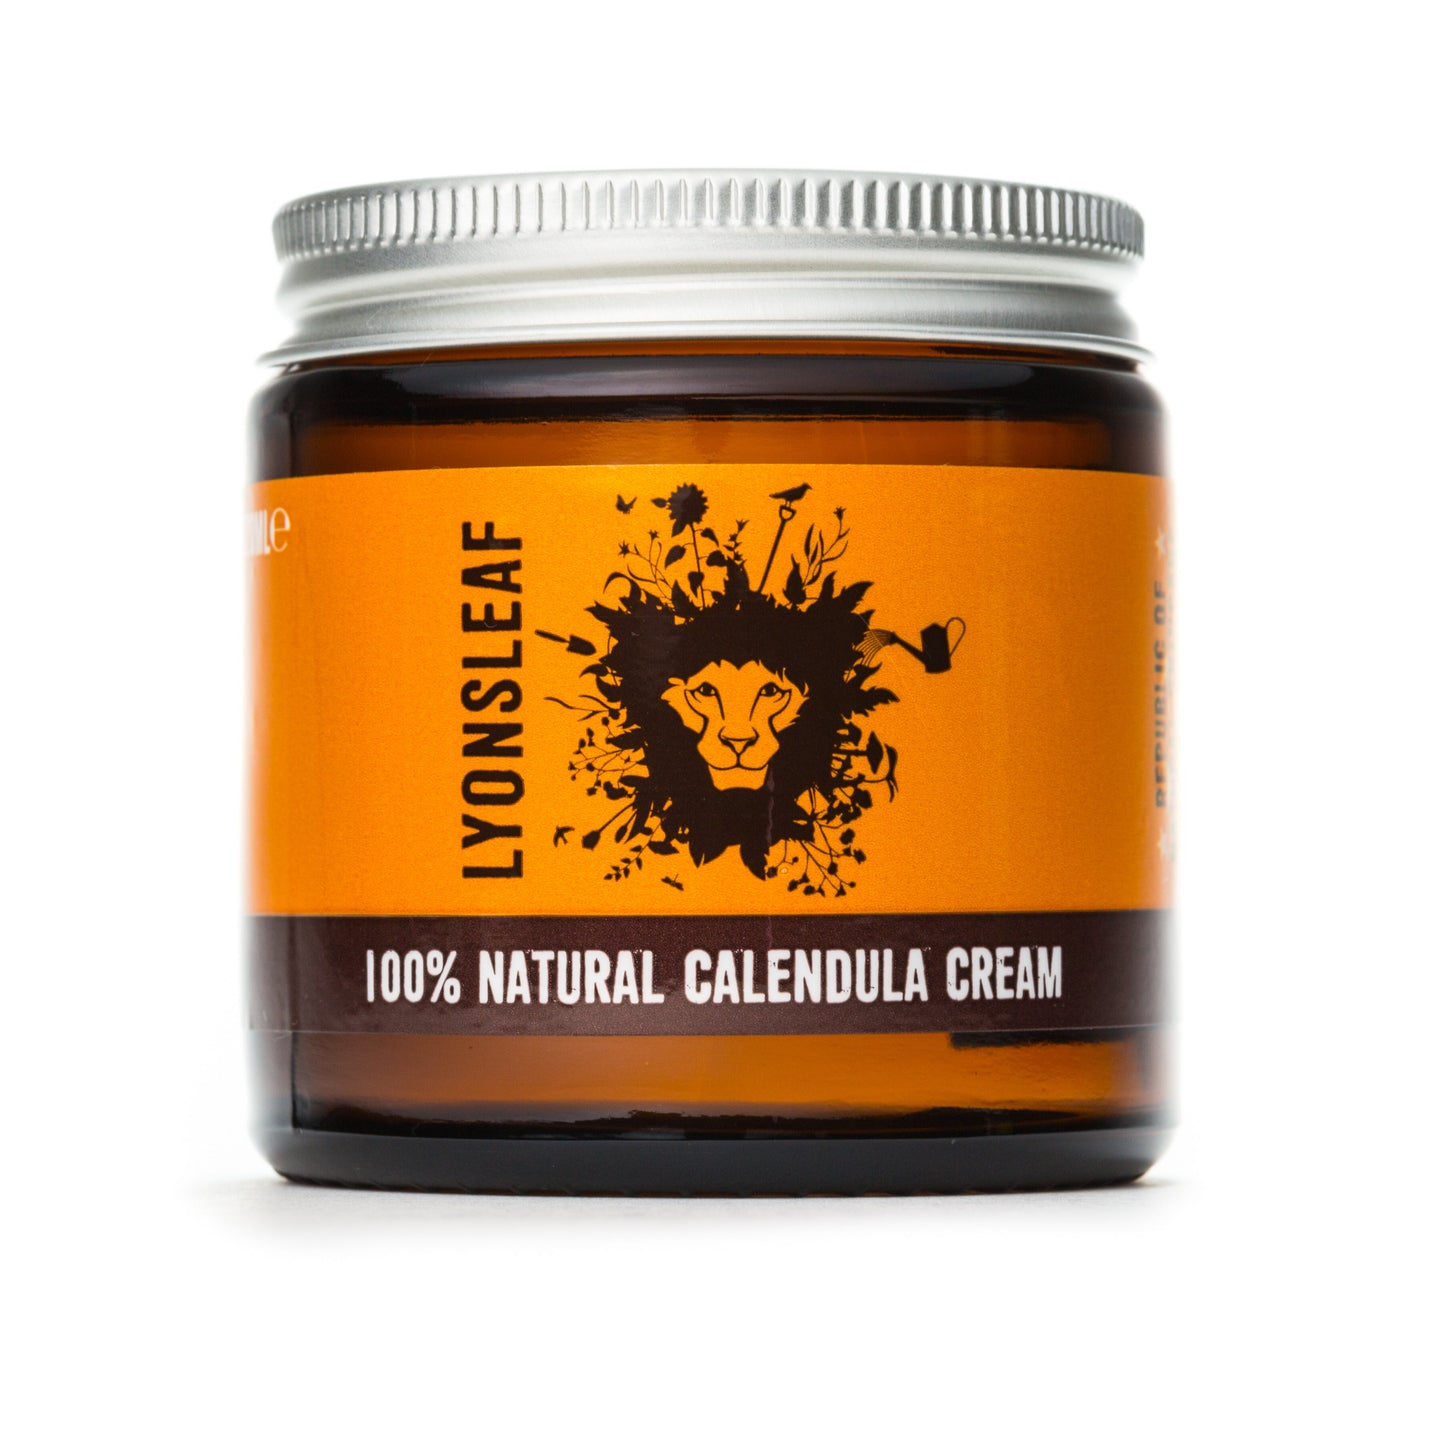 lyonsleaf calendula cream 120ml. 100% natural calendula cream comes in an amber glass jar with orange label and aluminium lid